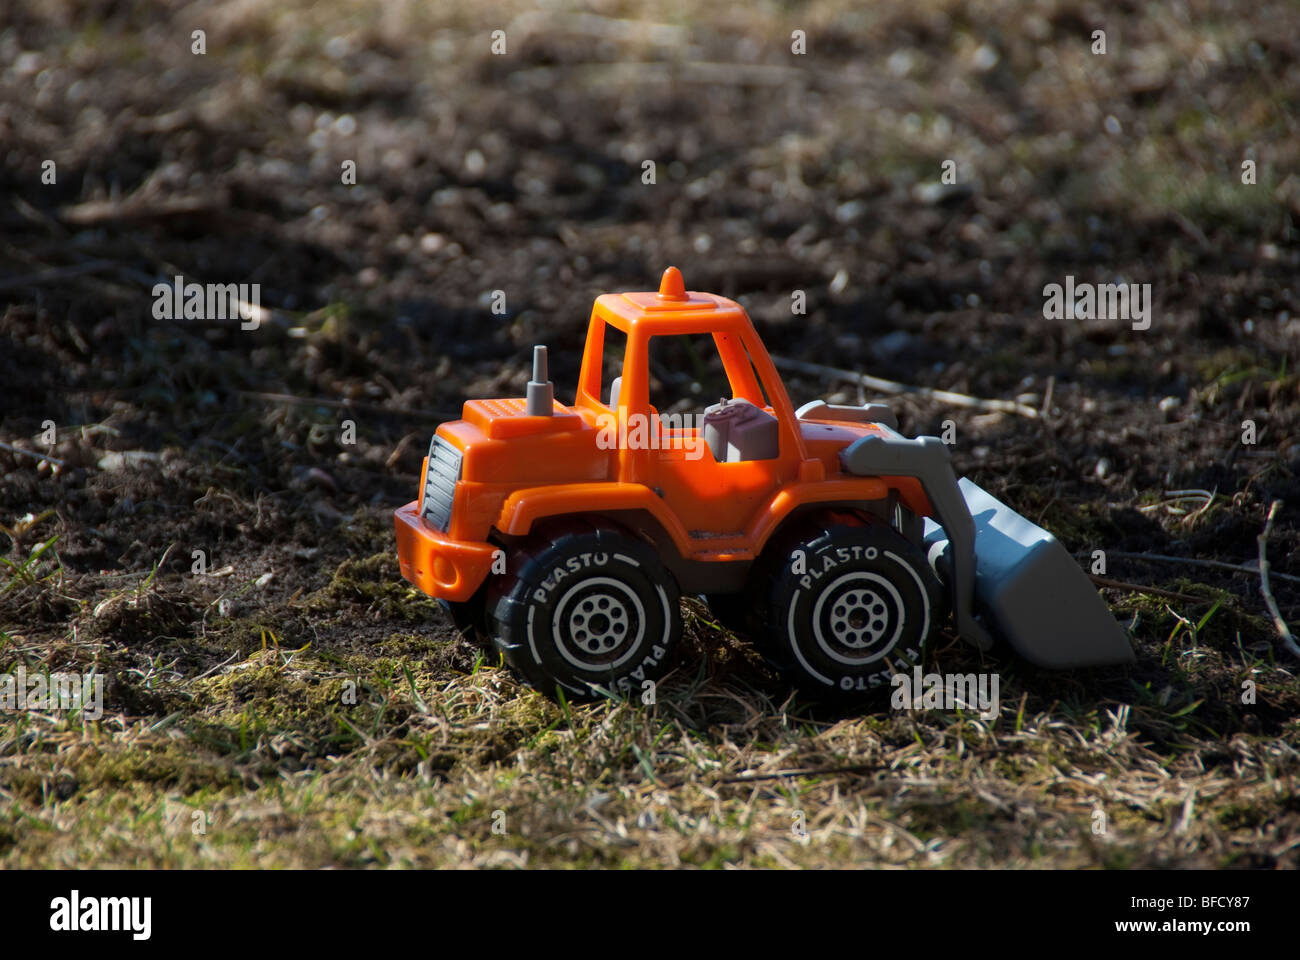 A plastic orange toy tractor on ground Stock Photo